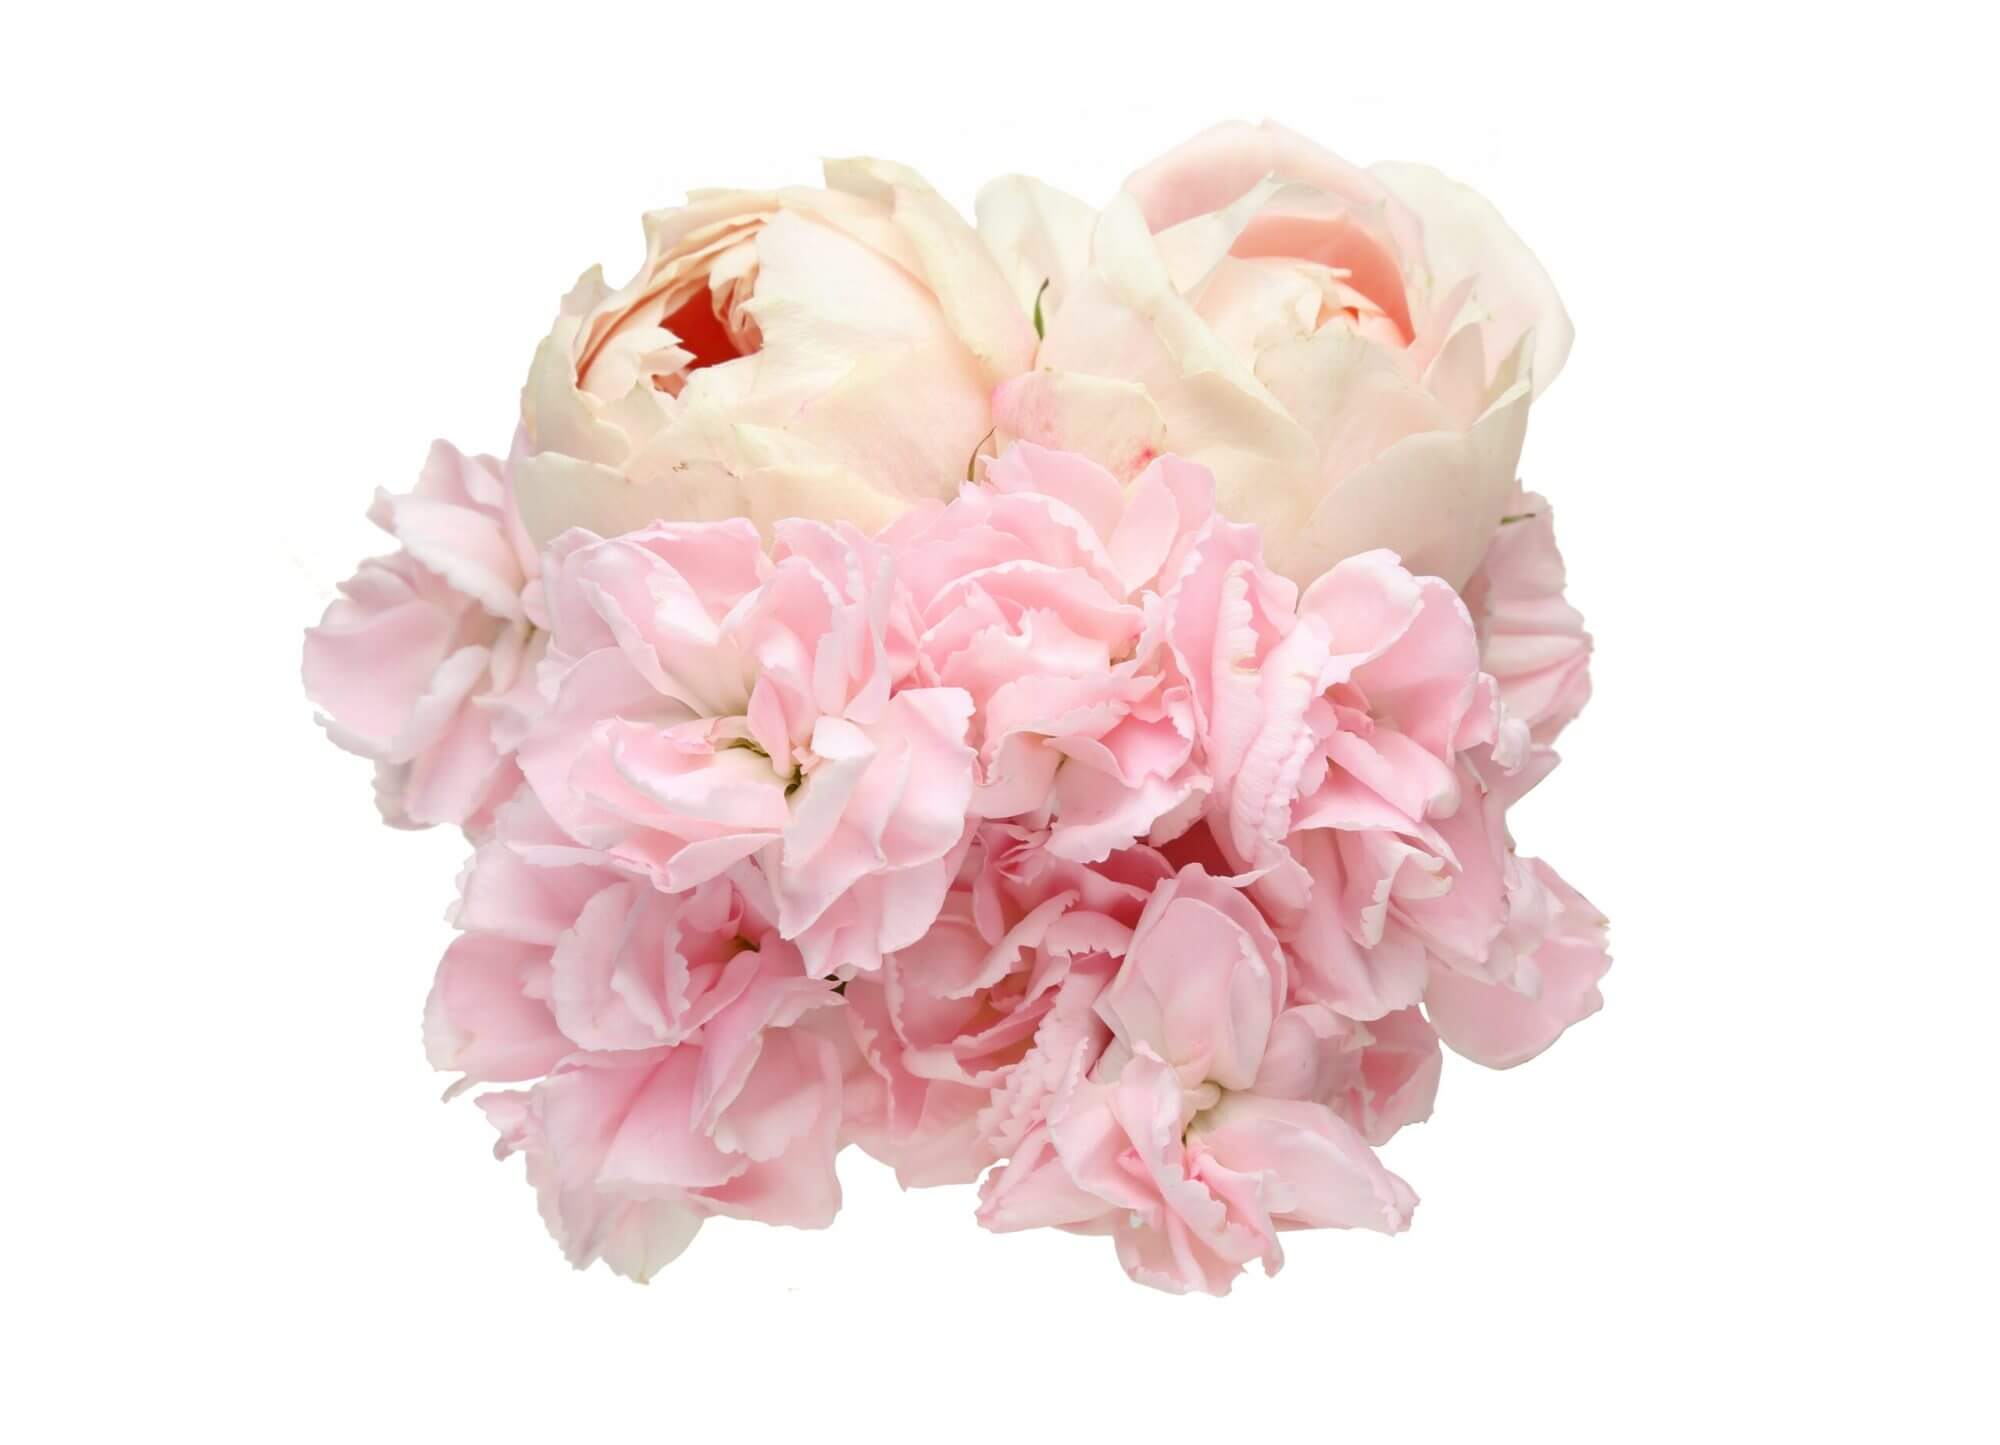 Mix Posie Flower Arrangement, buy flowers online delivery Sydney wide